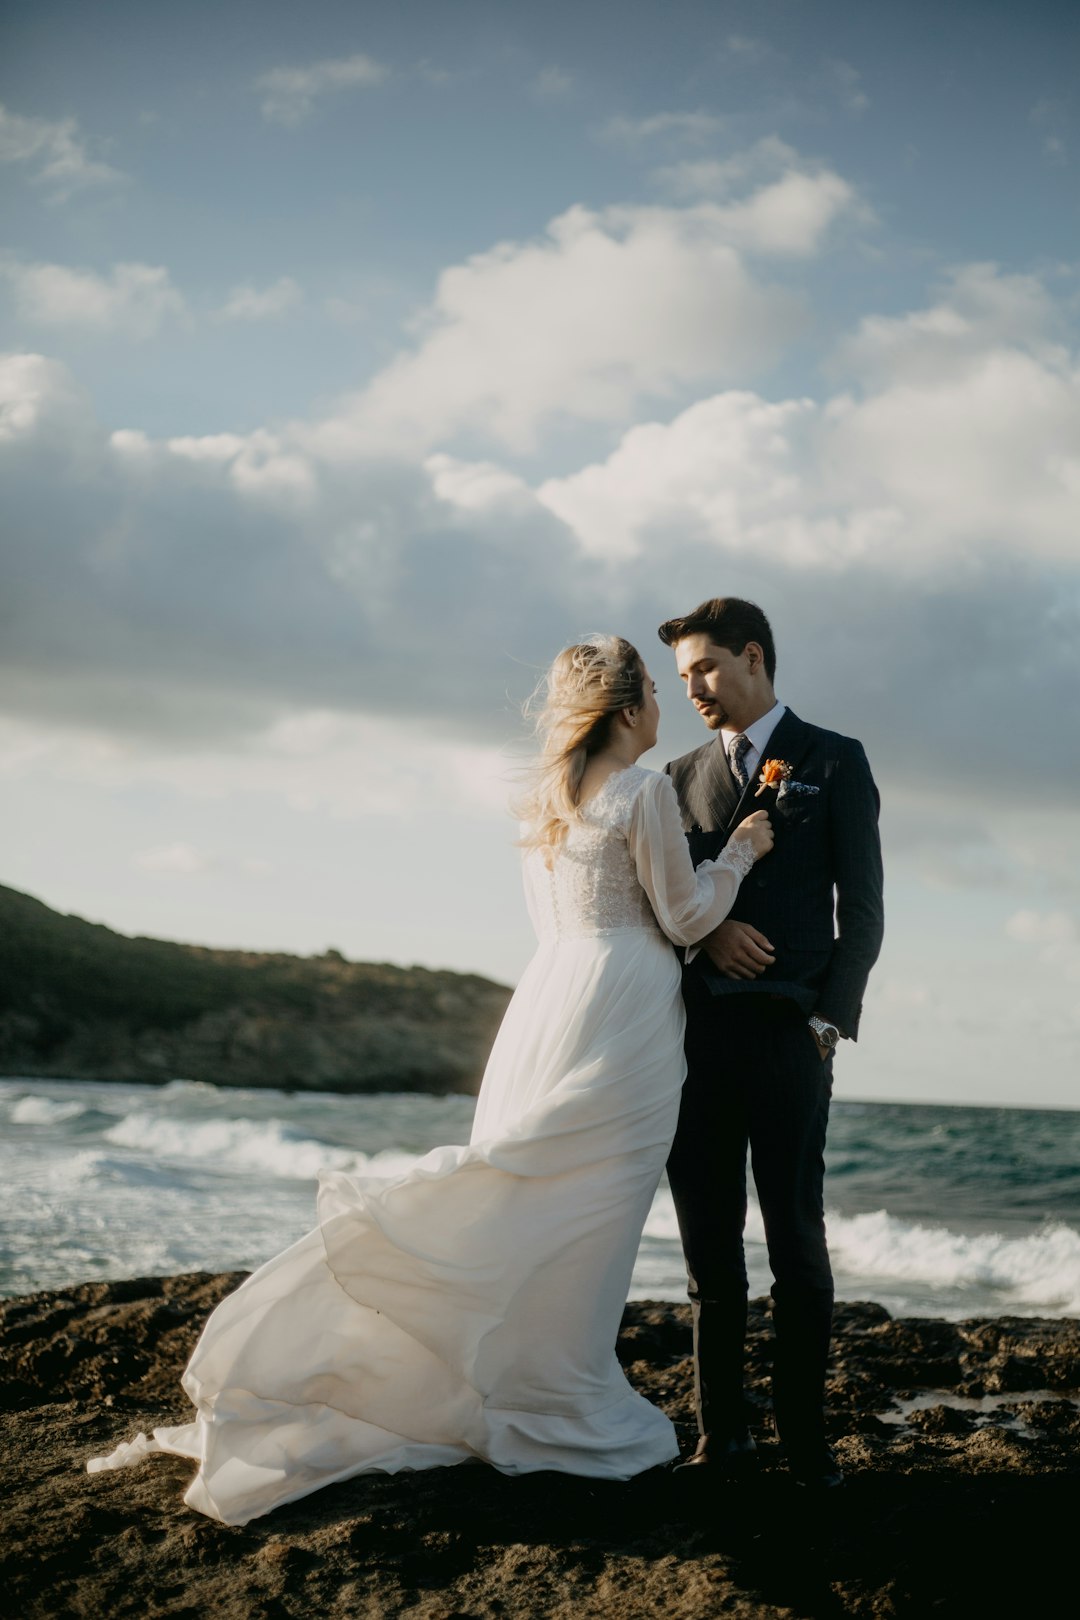 man in black suit kissing woman in white wedding dress on seashore during daytime